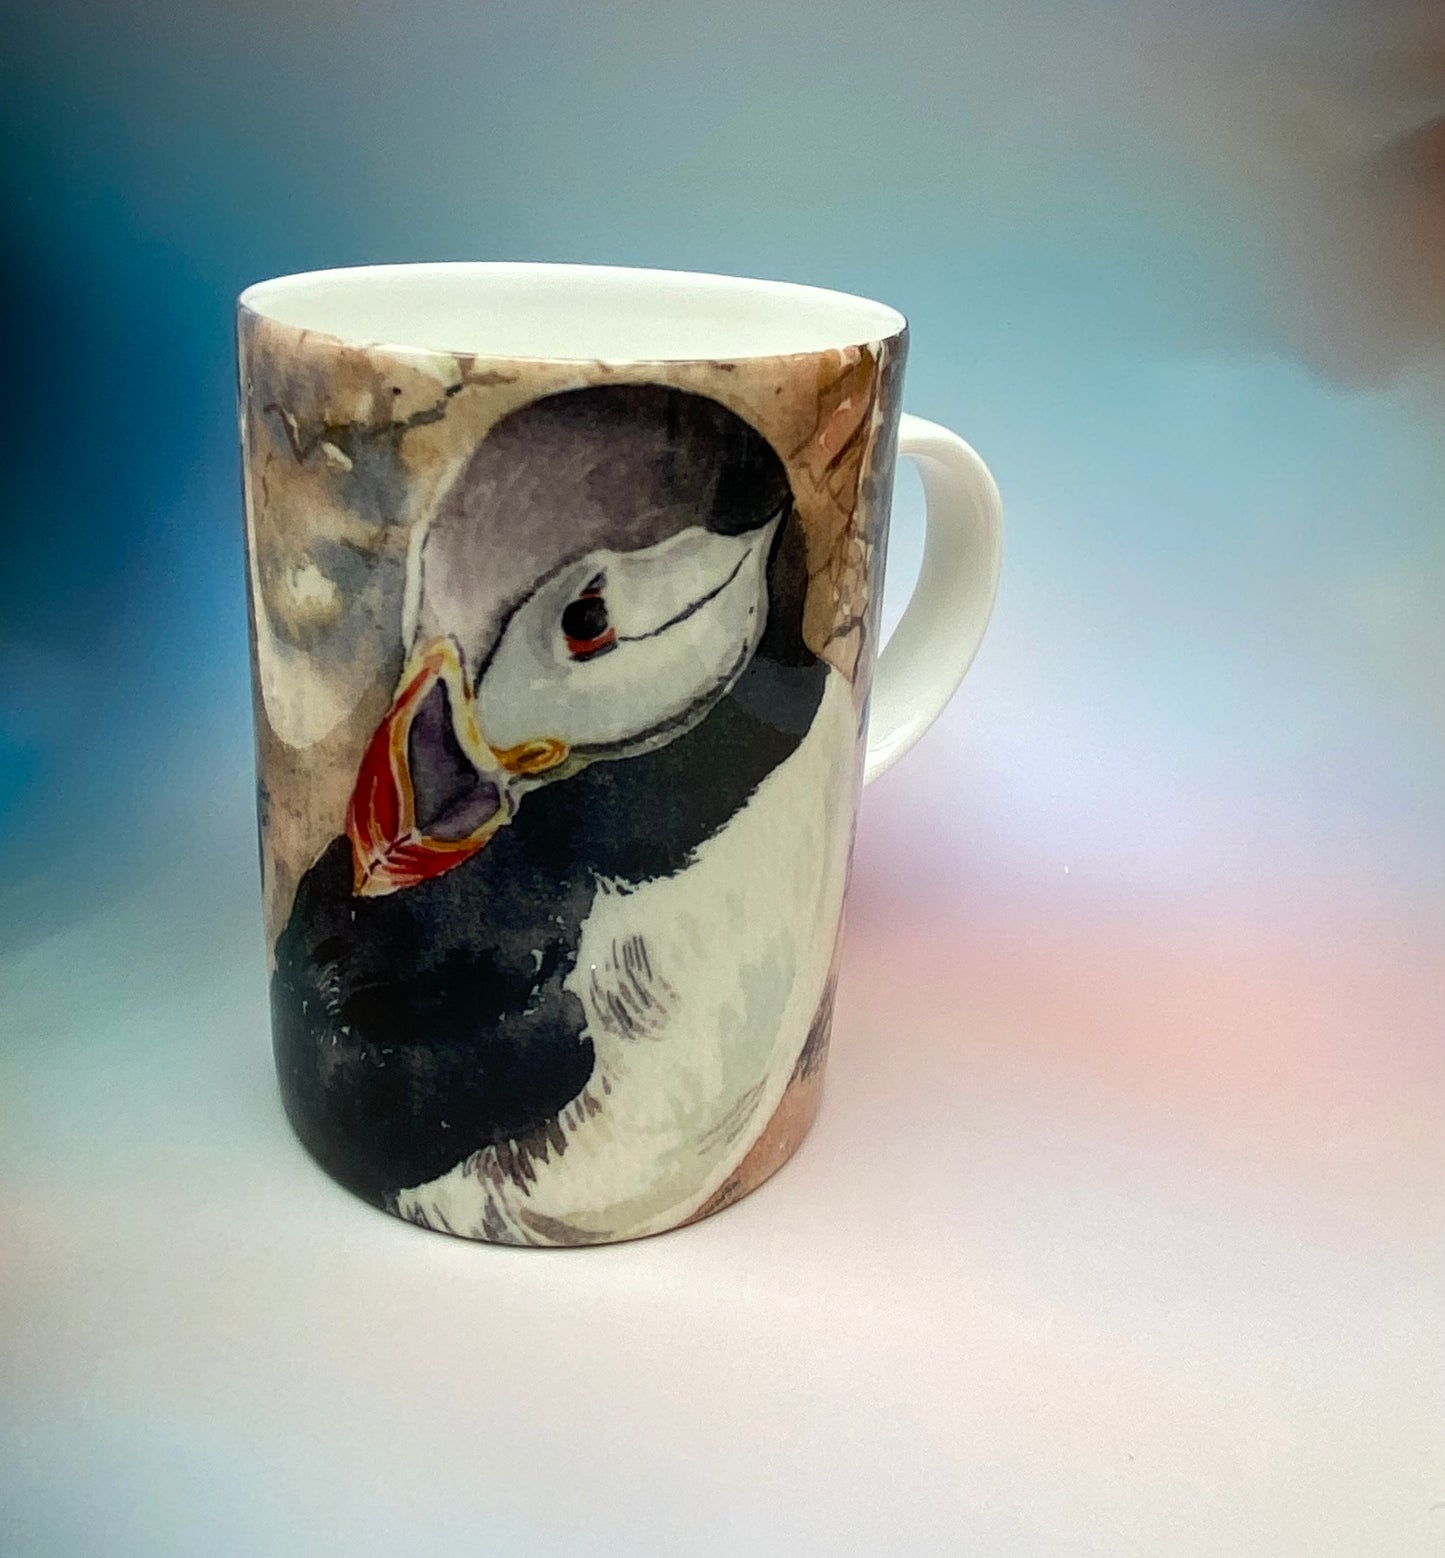 A mug with a puffins design by Orkney artist Jane Glue, Scotland